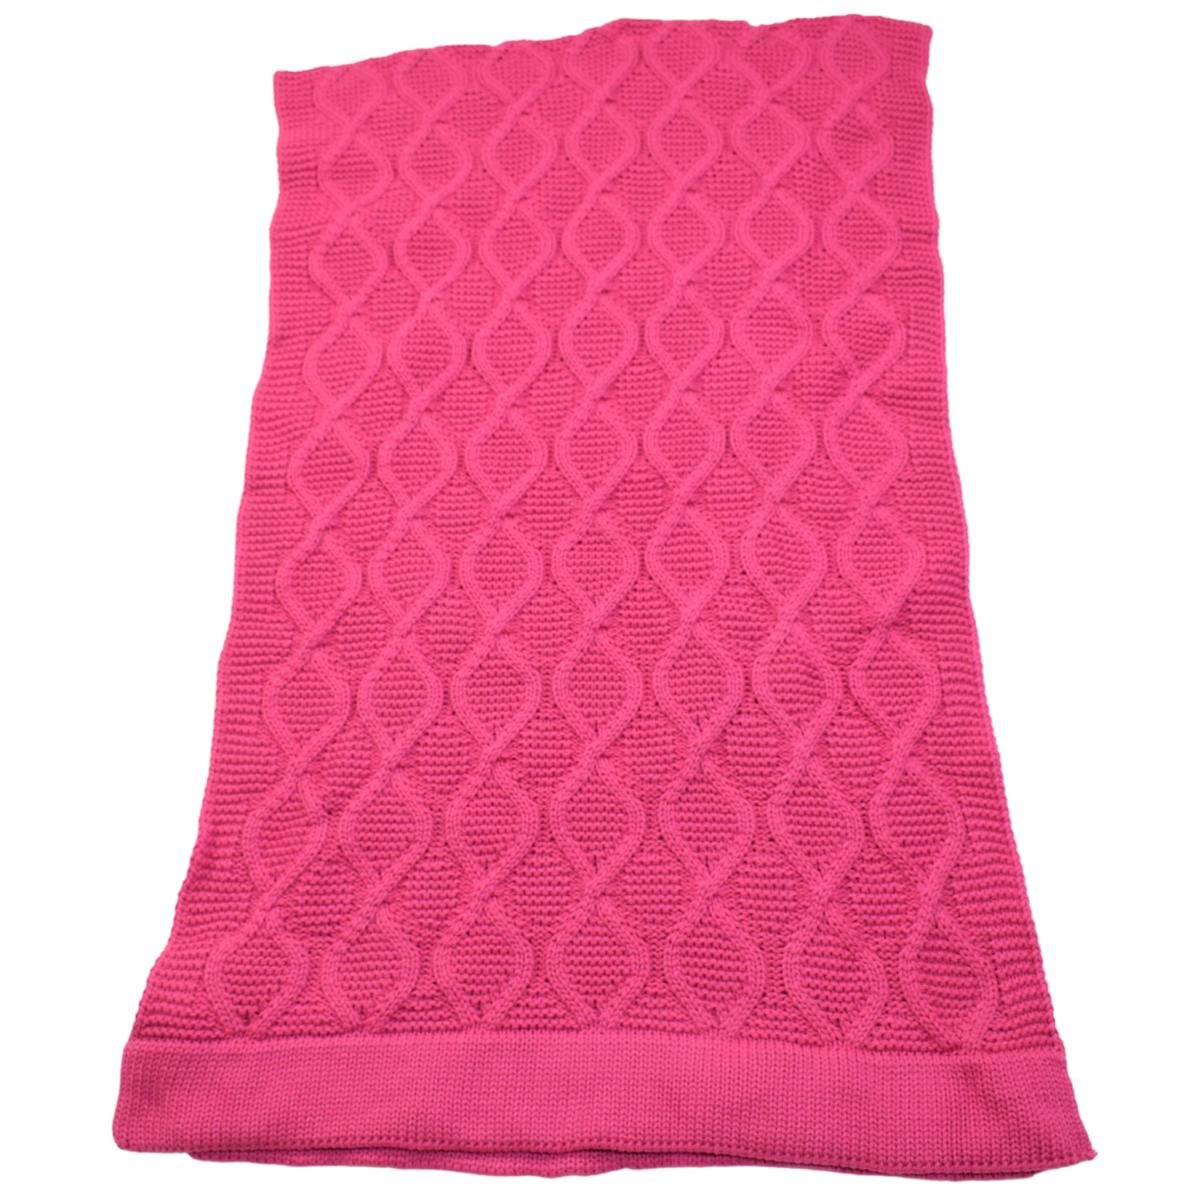 Peseira de tricot cama Queen 60 x 220cm arabescos Rosa Pink - 1